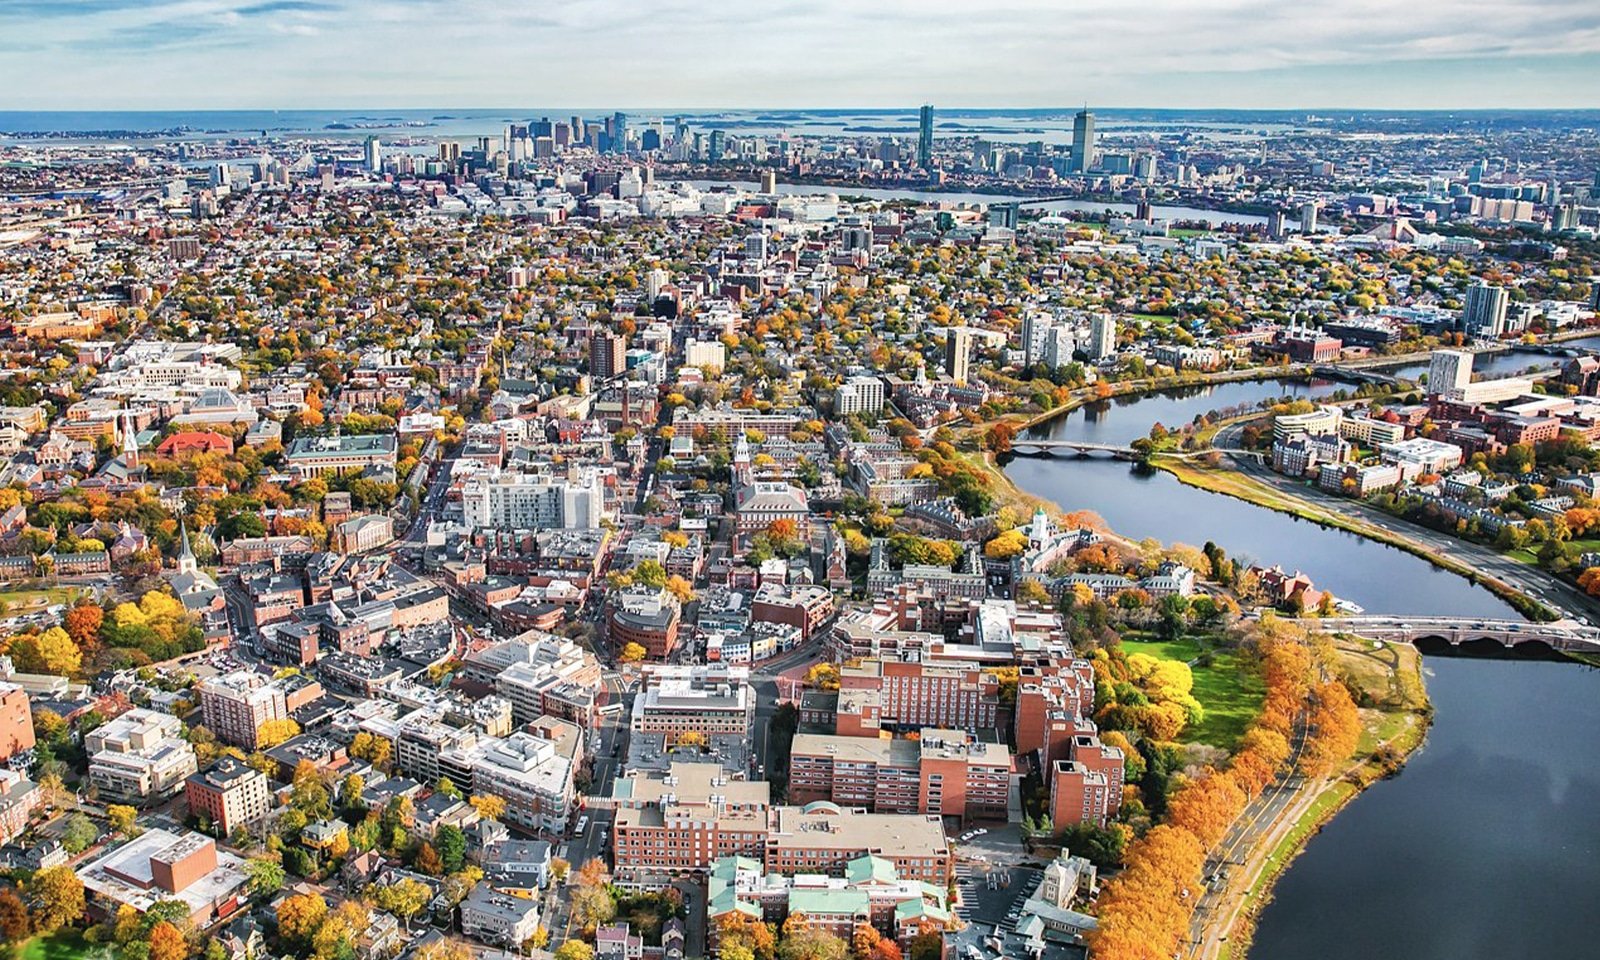 Aerial view of Cambridge